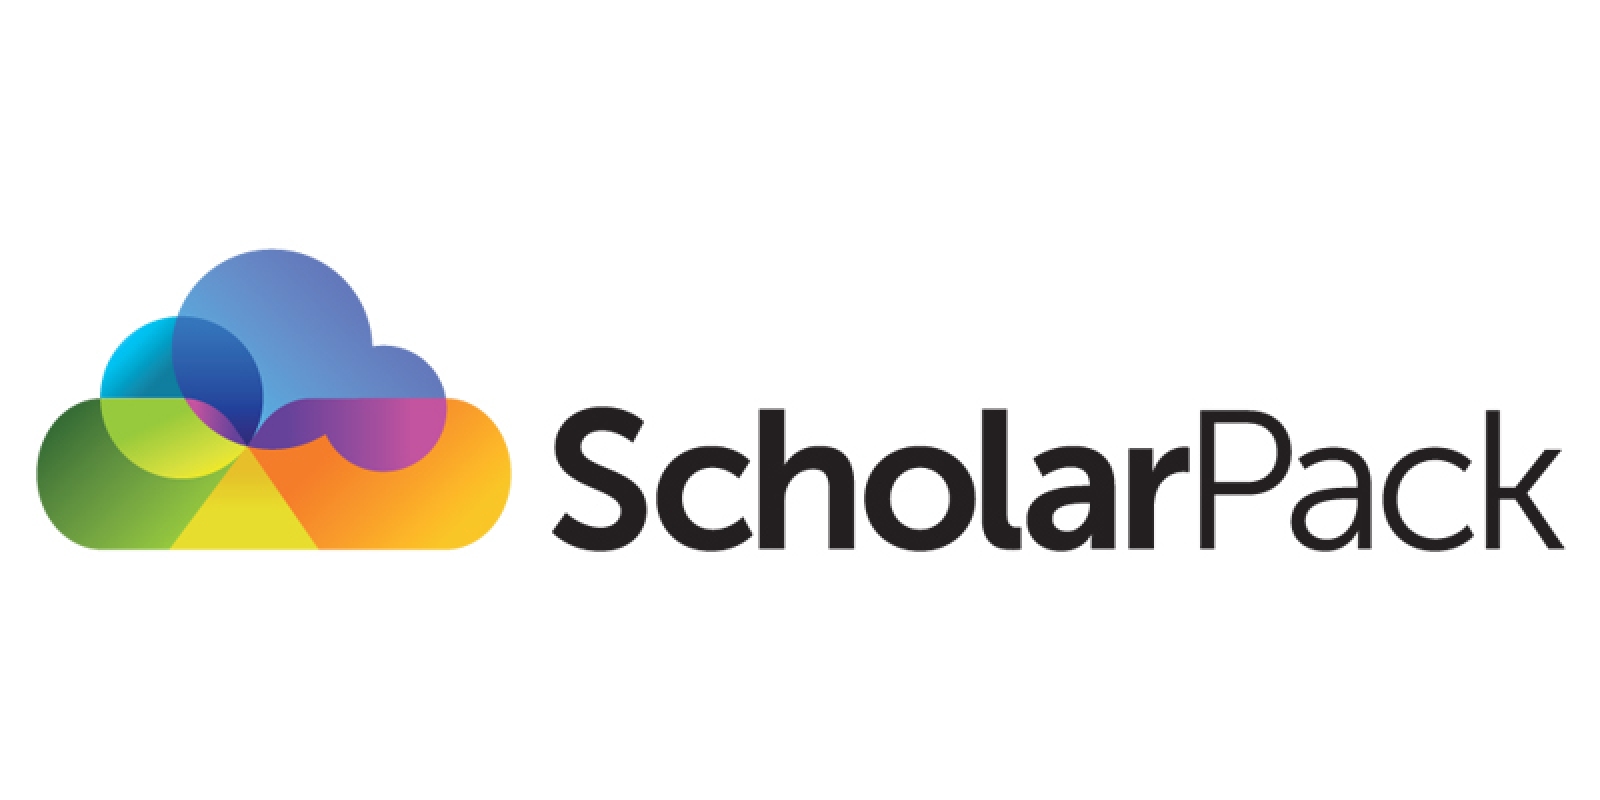 ScholarPack Logo